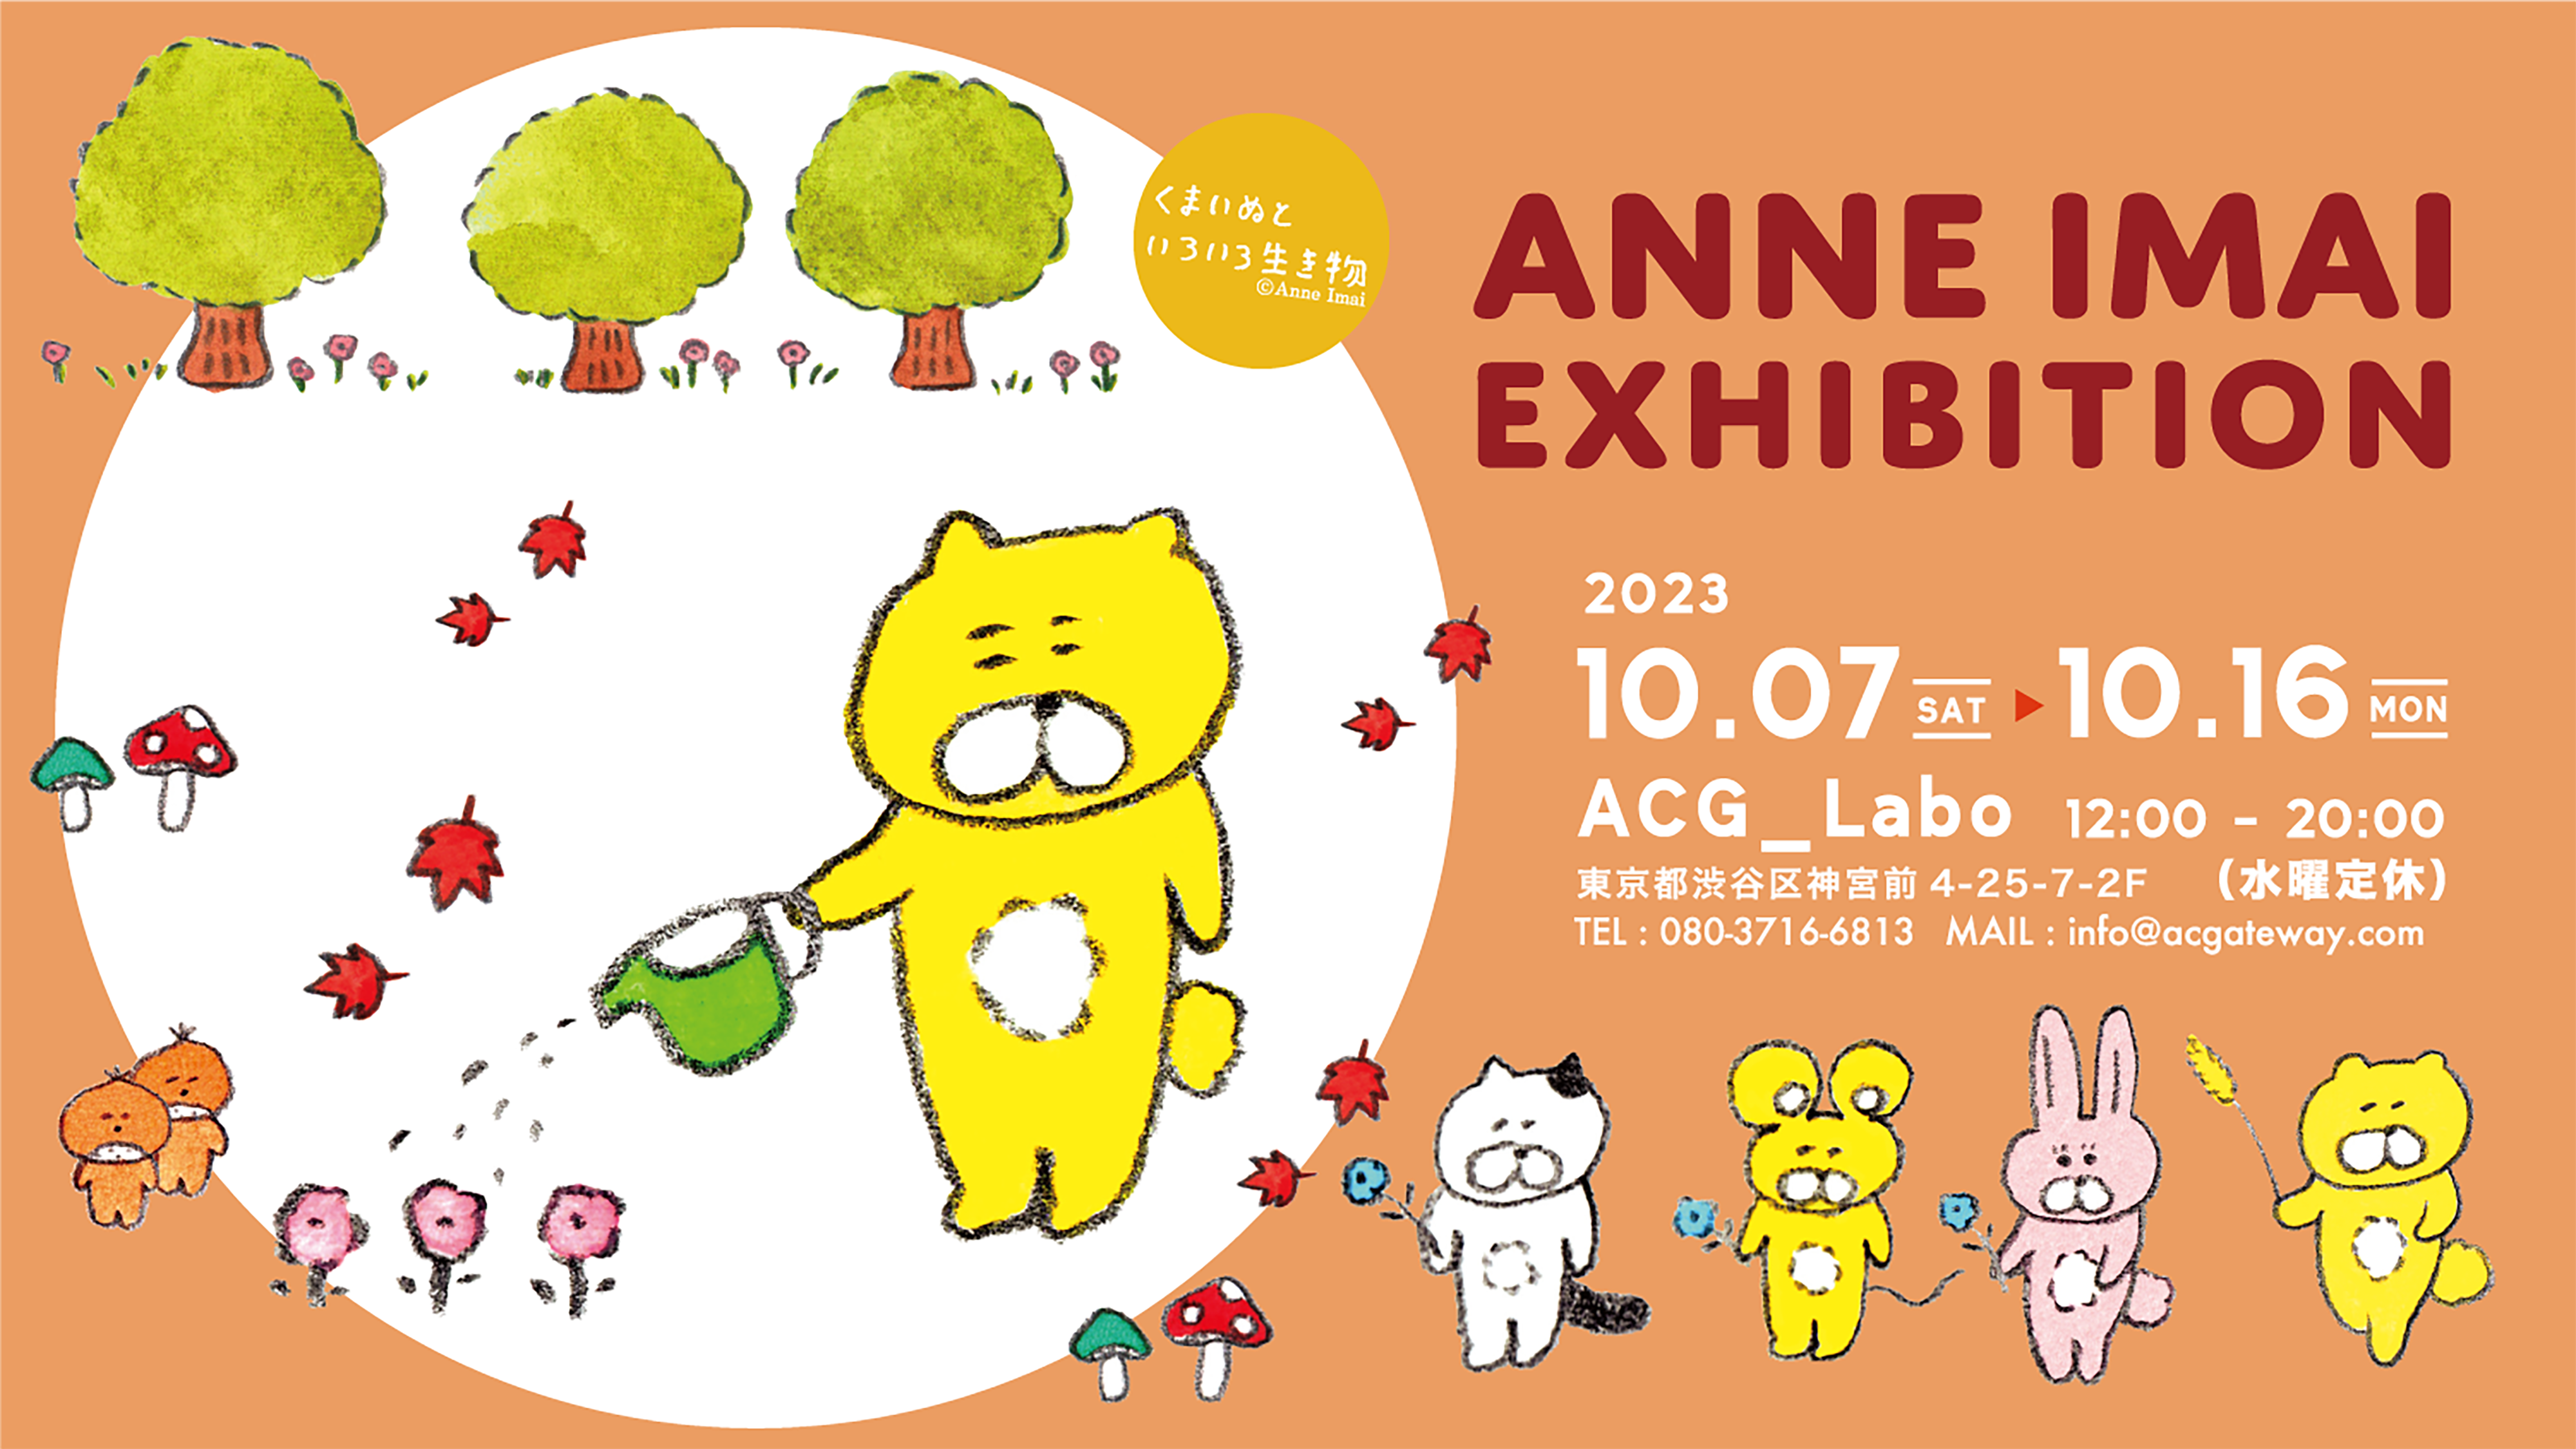 ANNE IMAI EXHIBITION』開催のお知らせ - Anne Imai official site